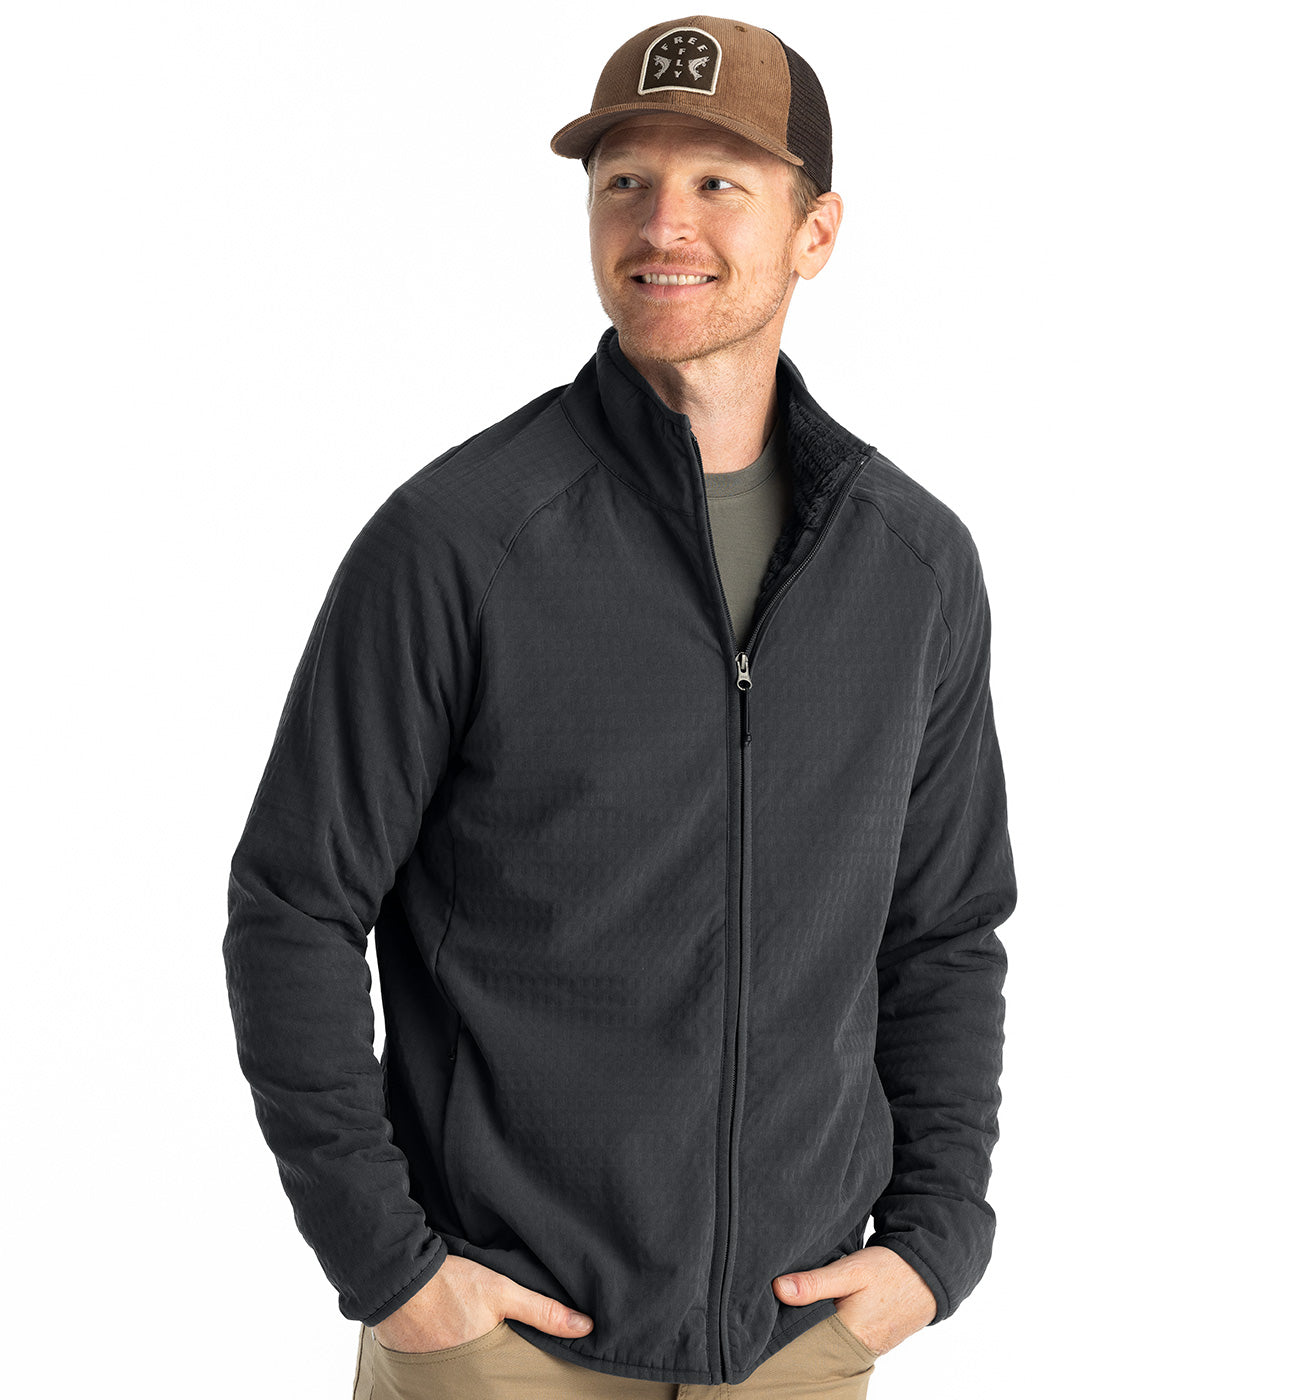 Men's Burton [ak] Tusk GORE-TEX PRO 3L Jacket – Dreamruns.com